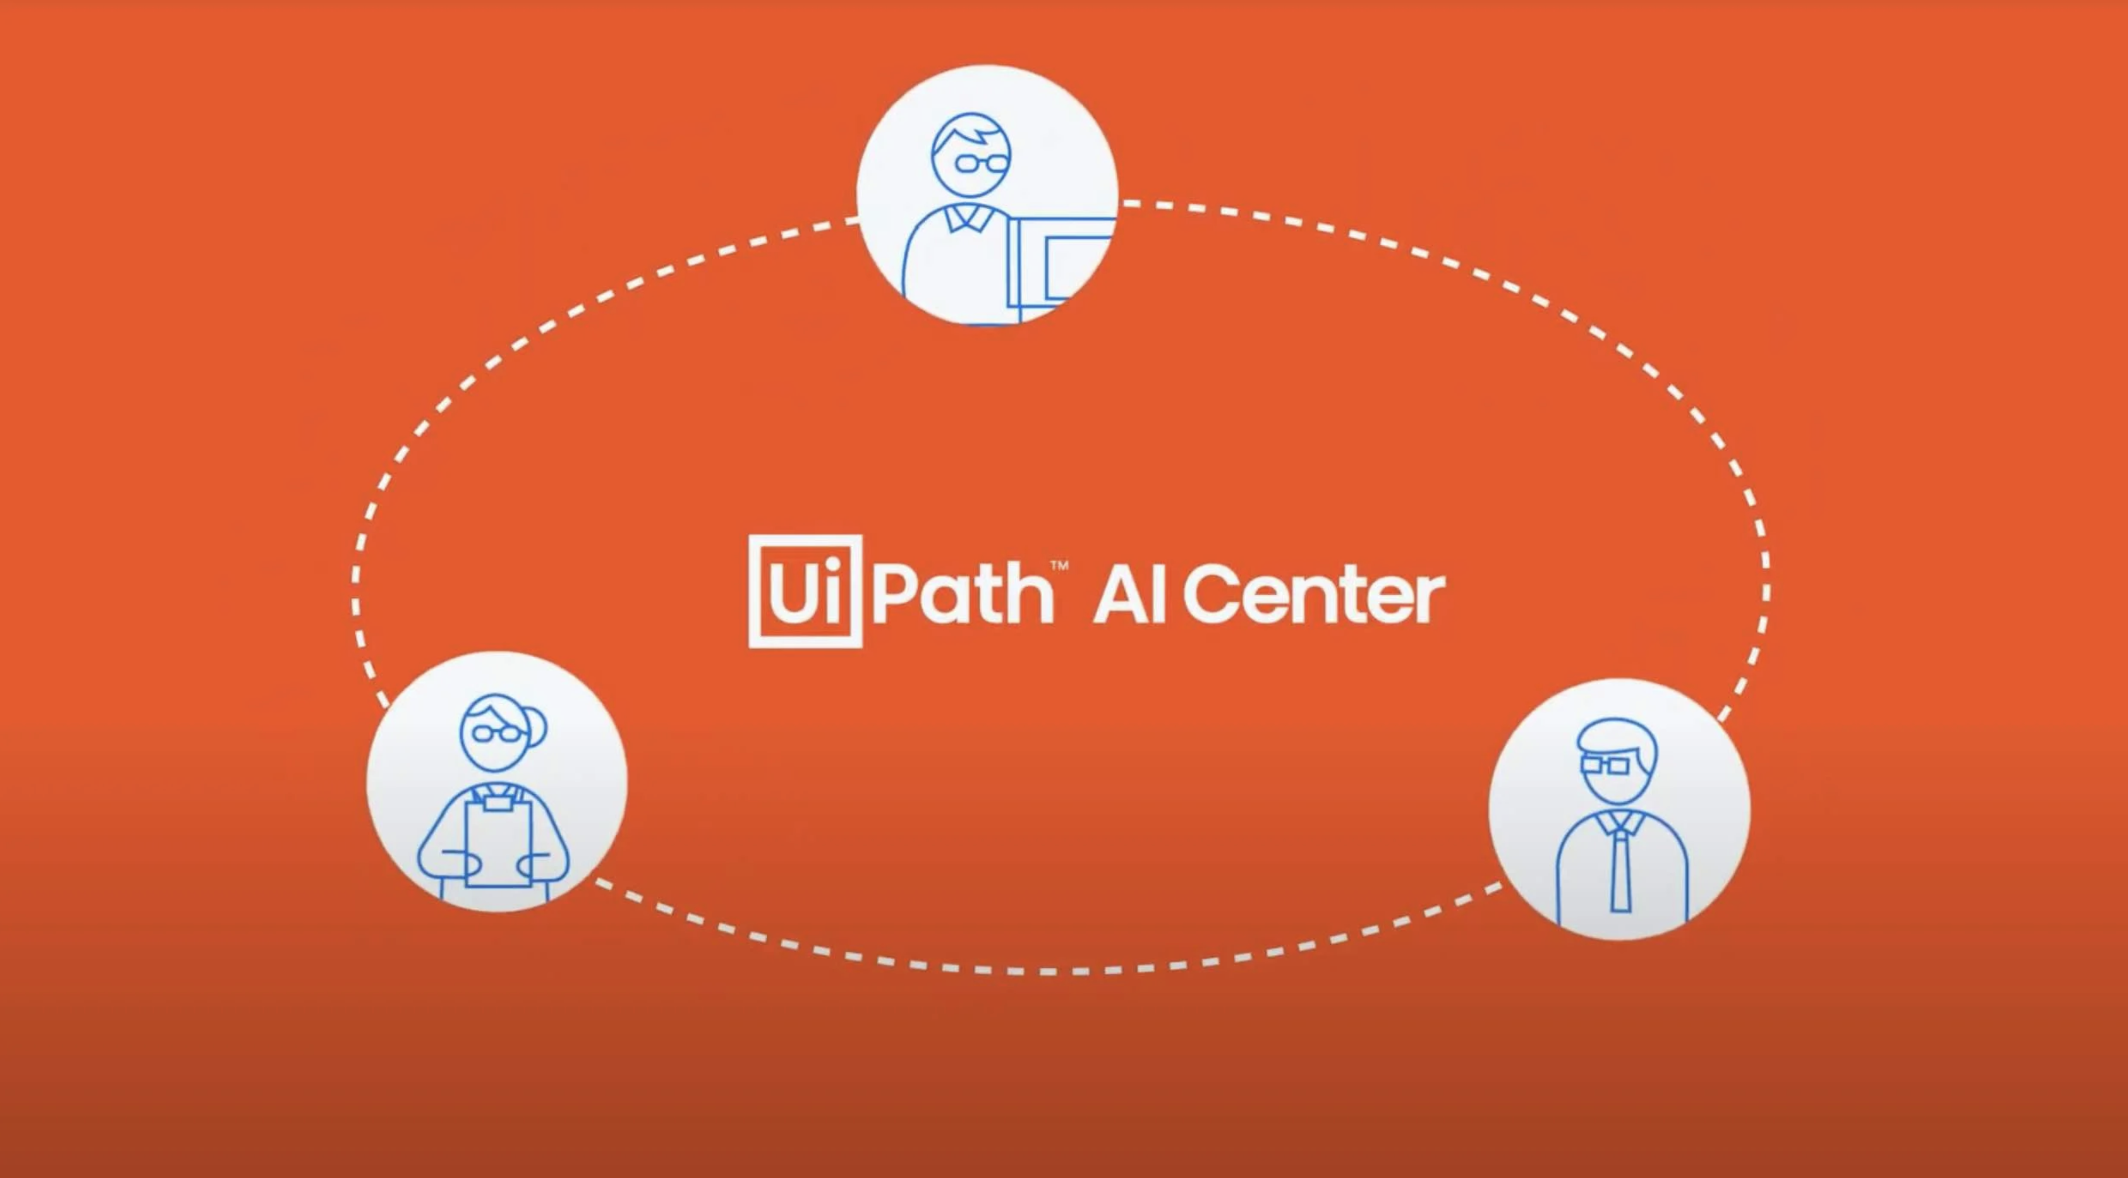 UiPath AI Center: Bridging the gap between RPA and AI